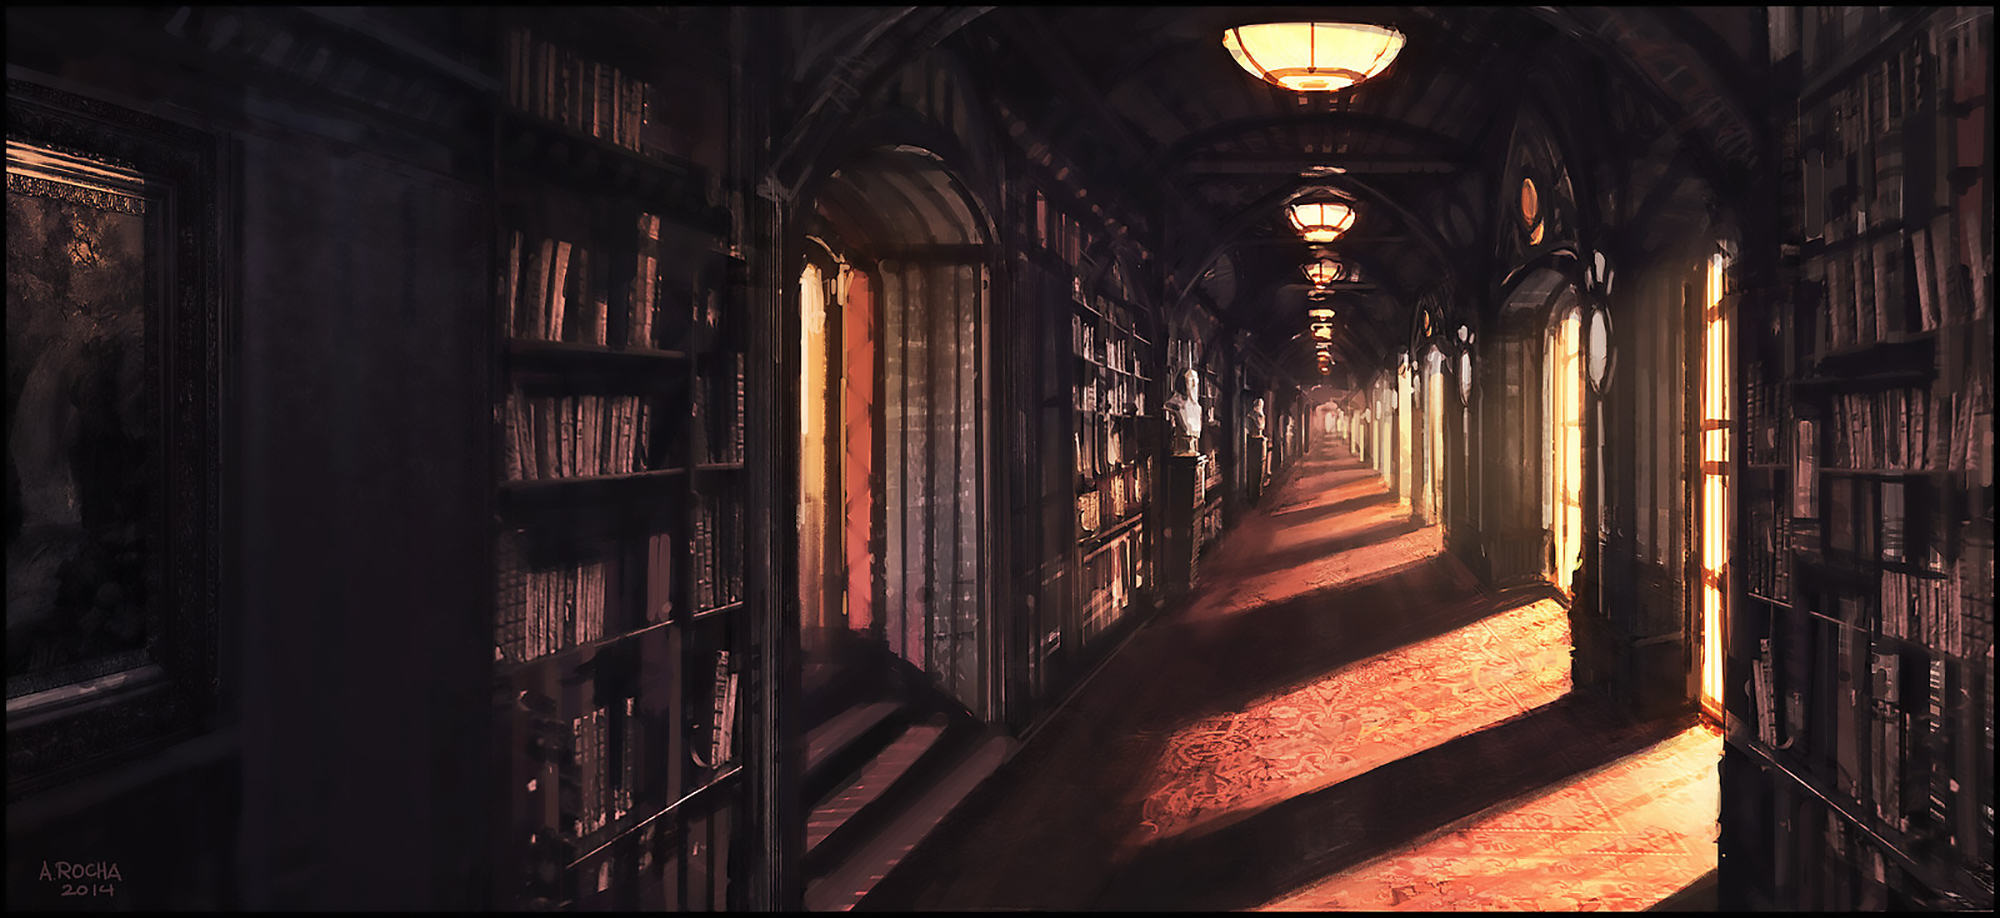 Library Sunlight 2000x918